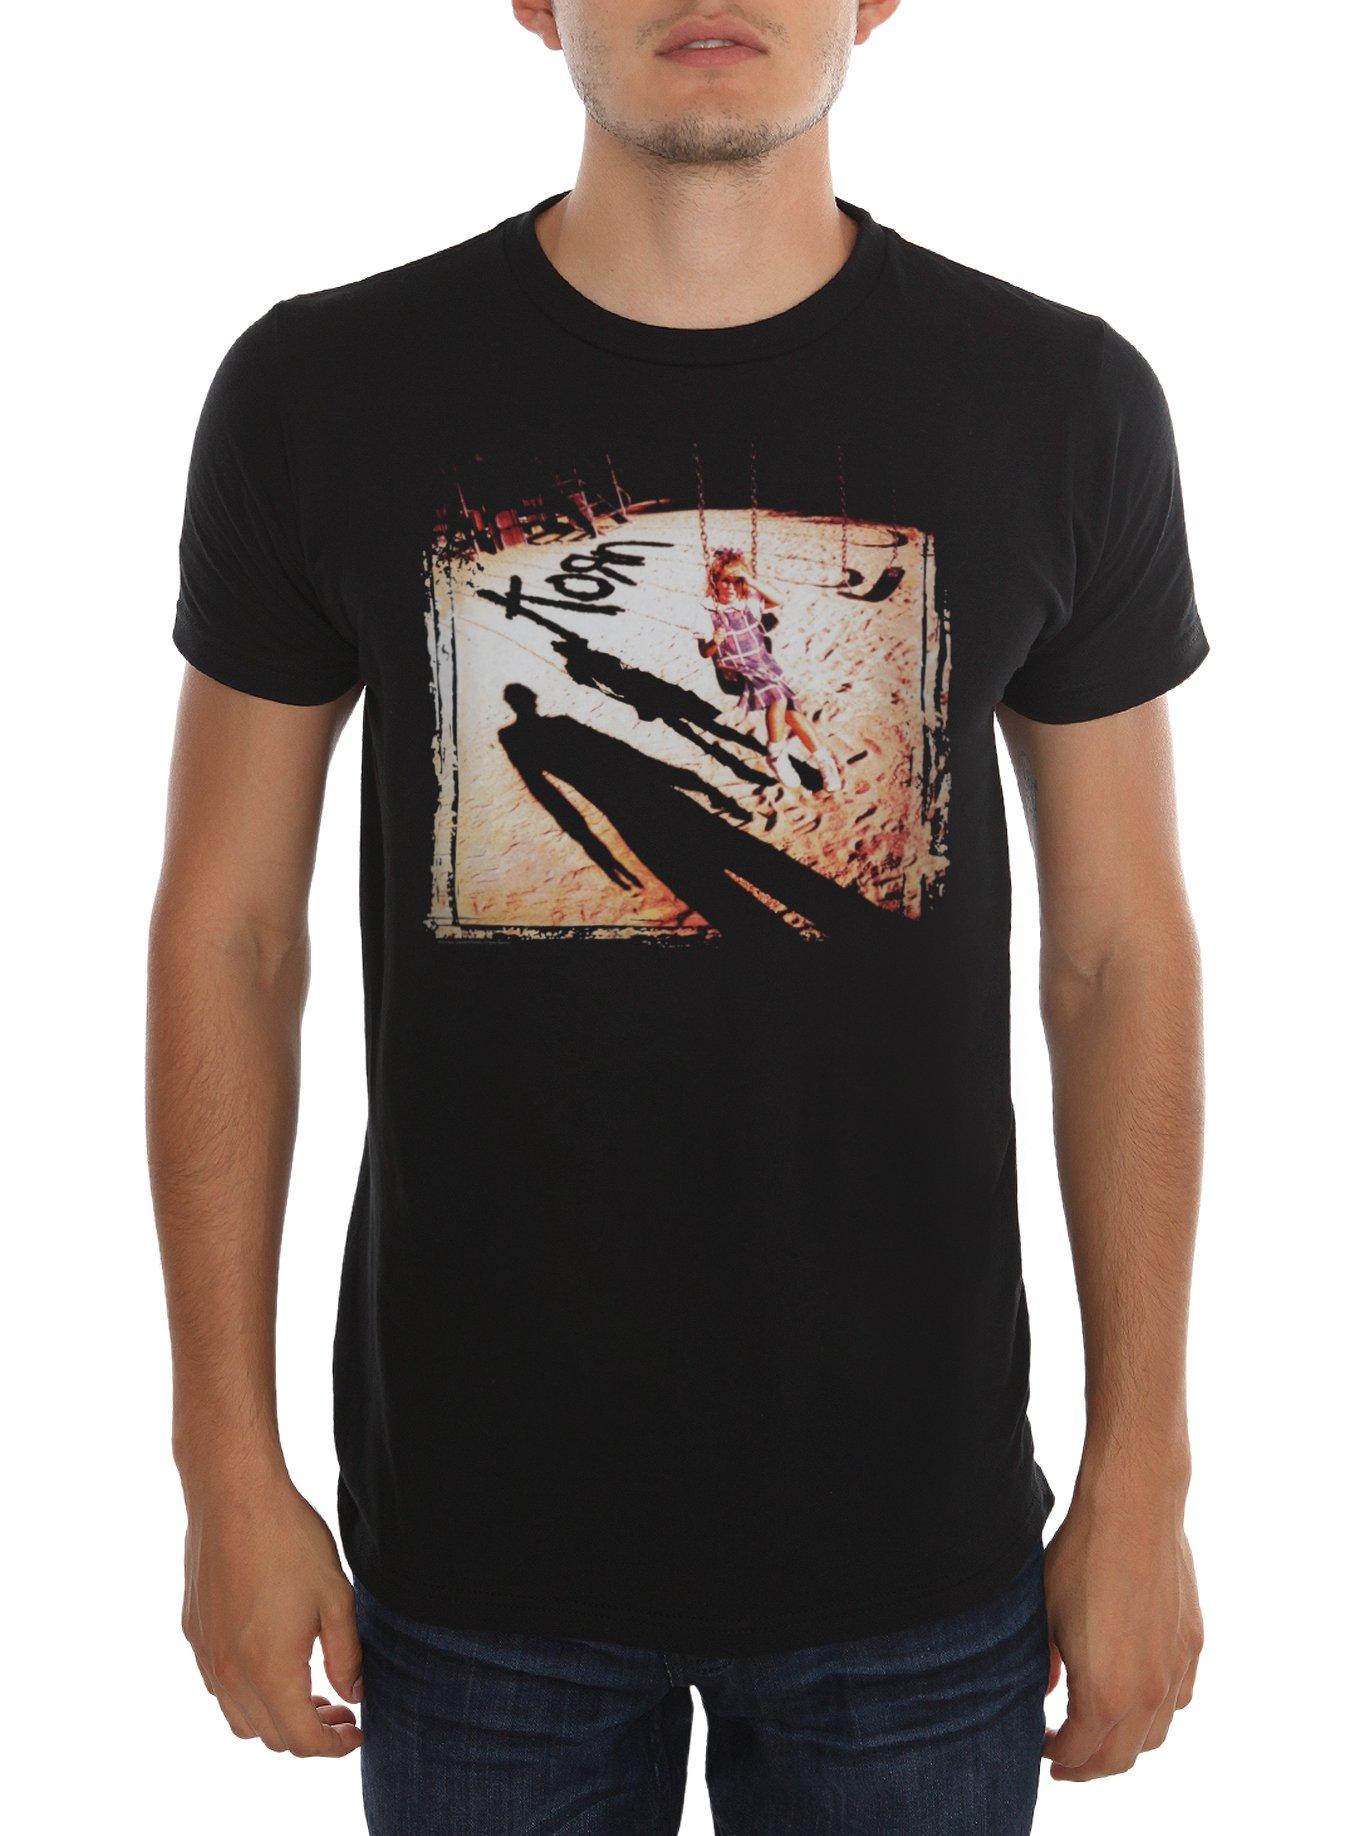 Korn Debut T-Shirt, , hi-res